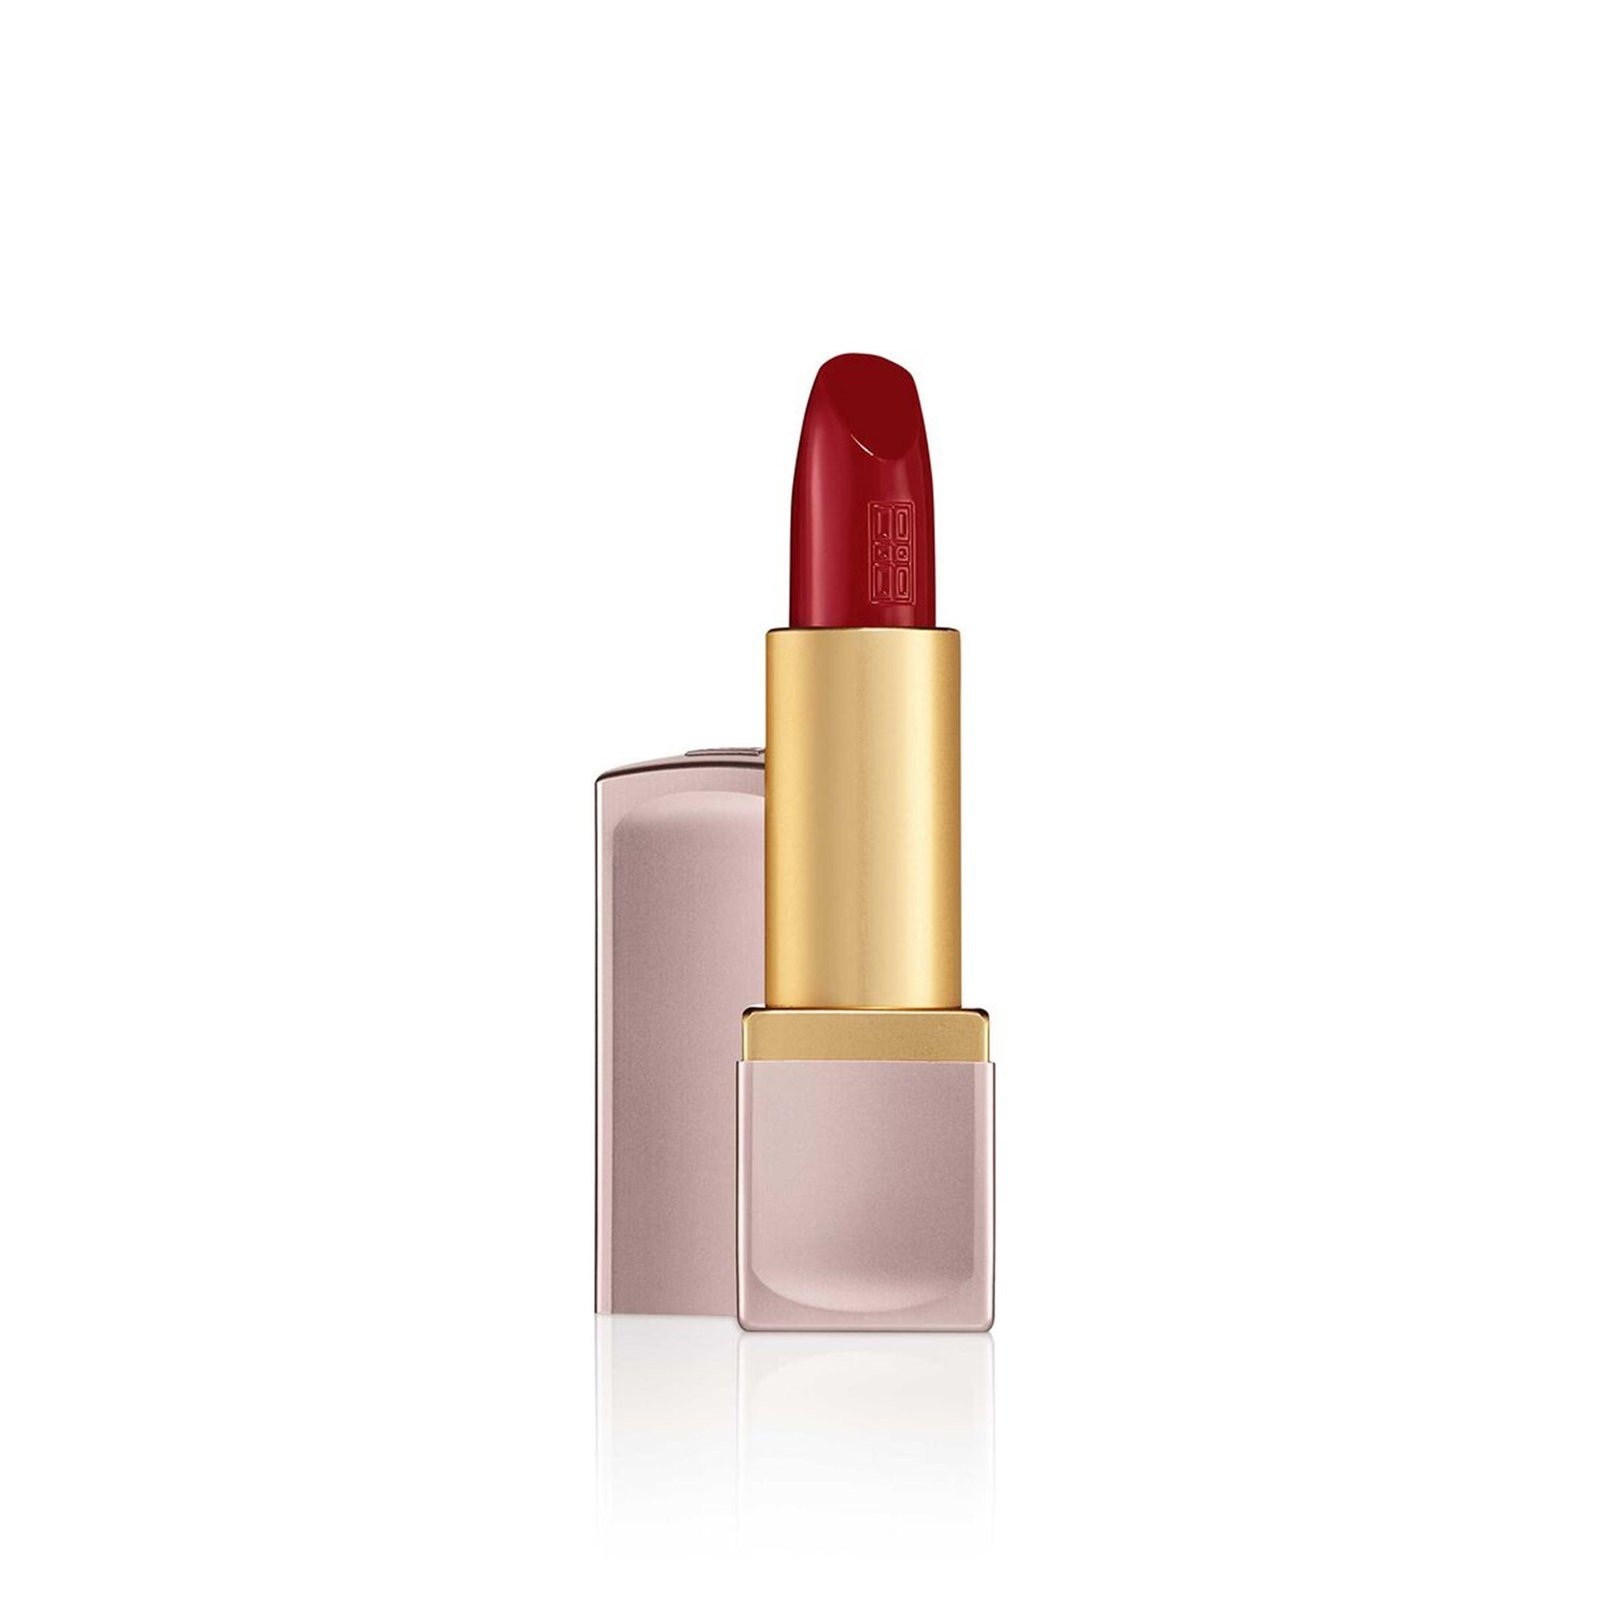 Elizabeth Arden Lip Color Lipstick 16 Rich Merlot 4g (0.14 oz)